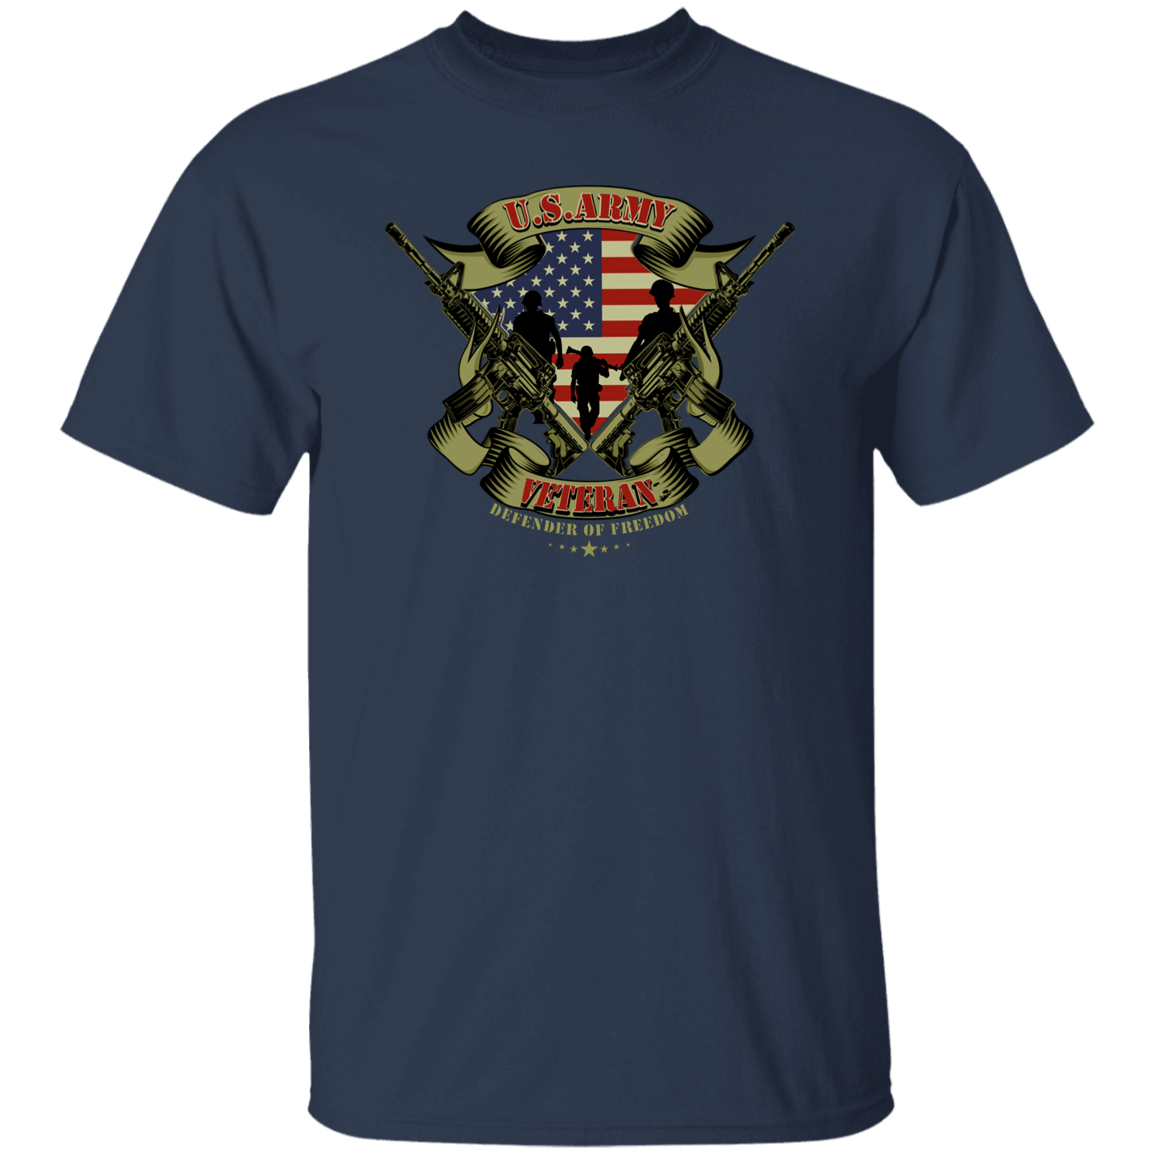 US ARMY VETERAN Defender of Freedom 5.3 oz. T-Shirt